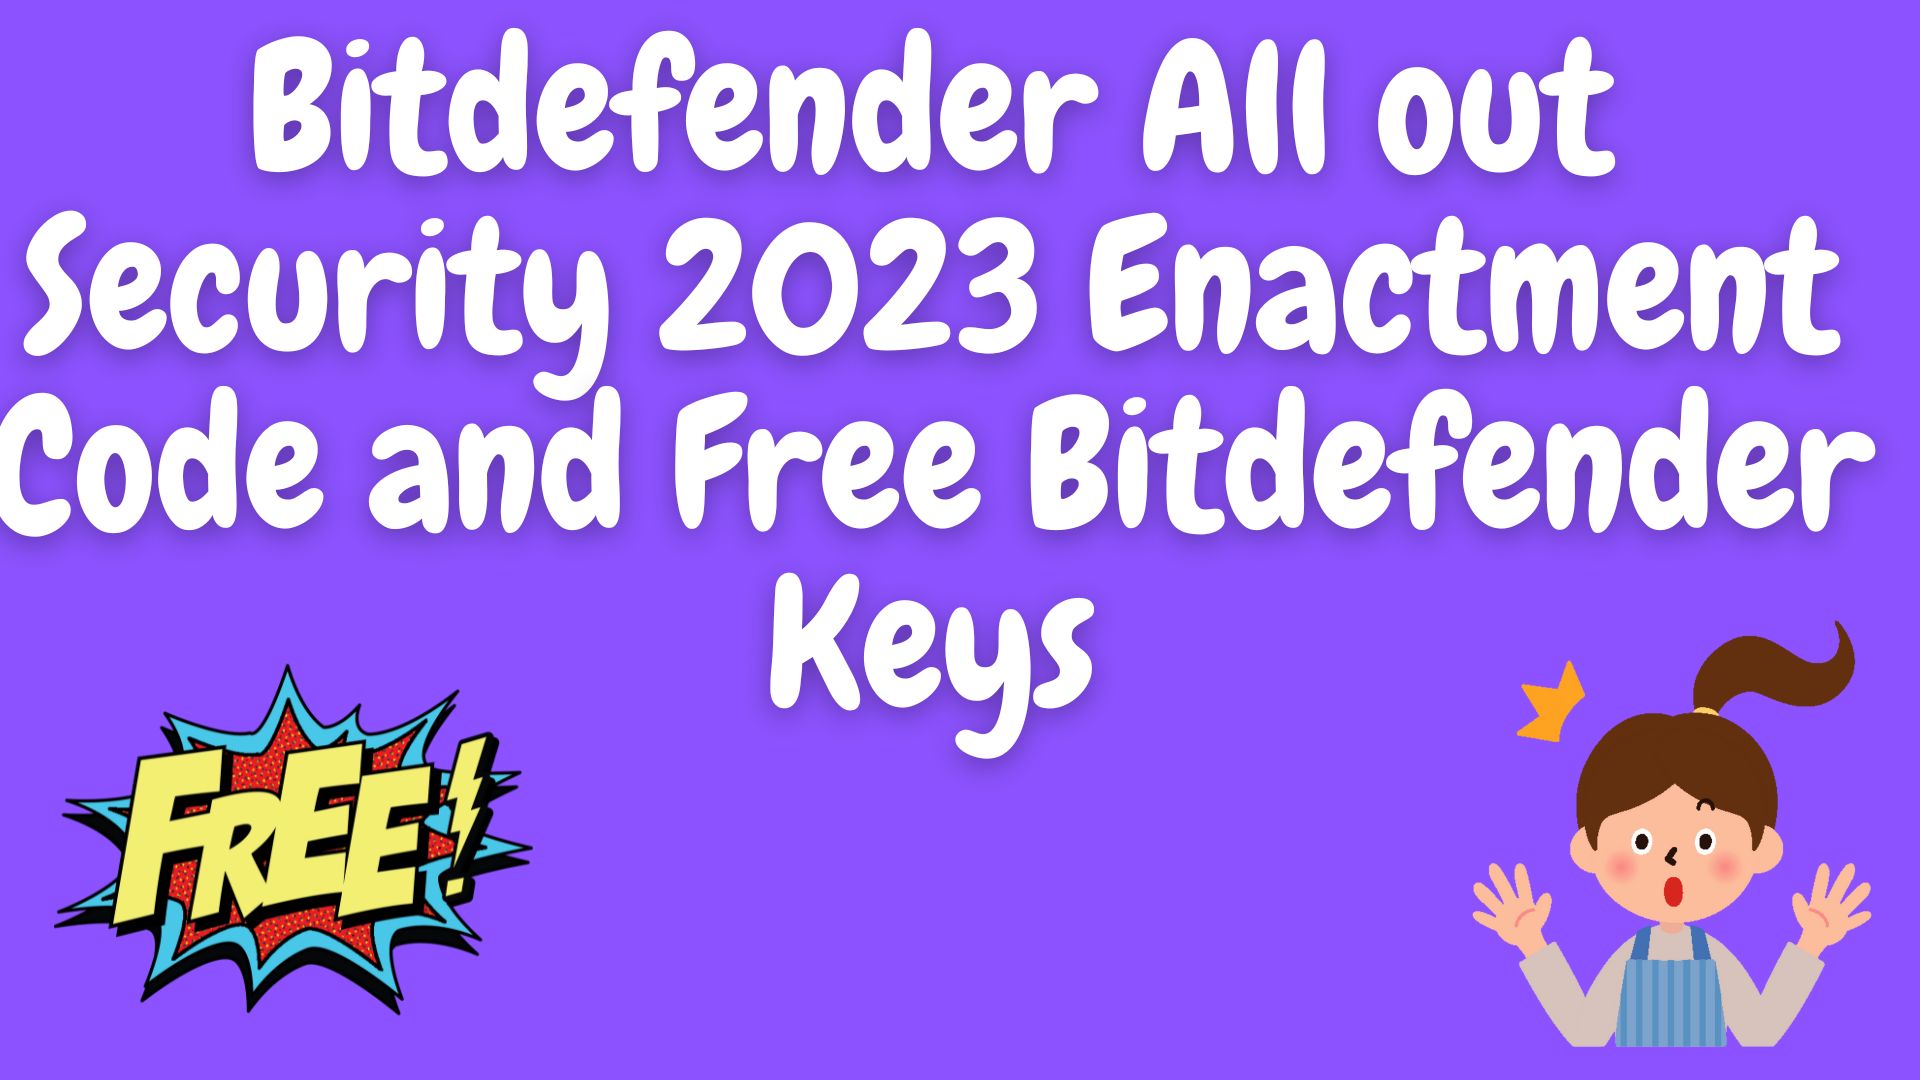 Bitdefender all out security 2023 enactment code and free bitdefender keys